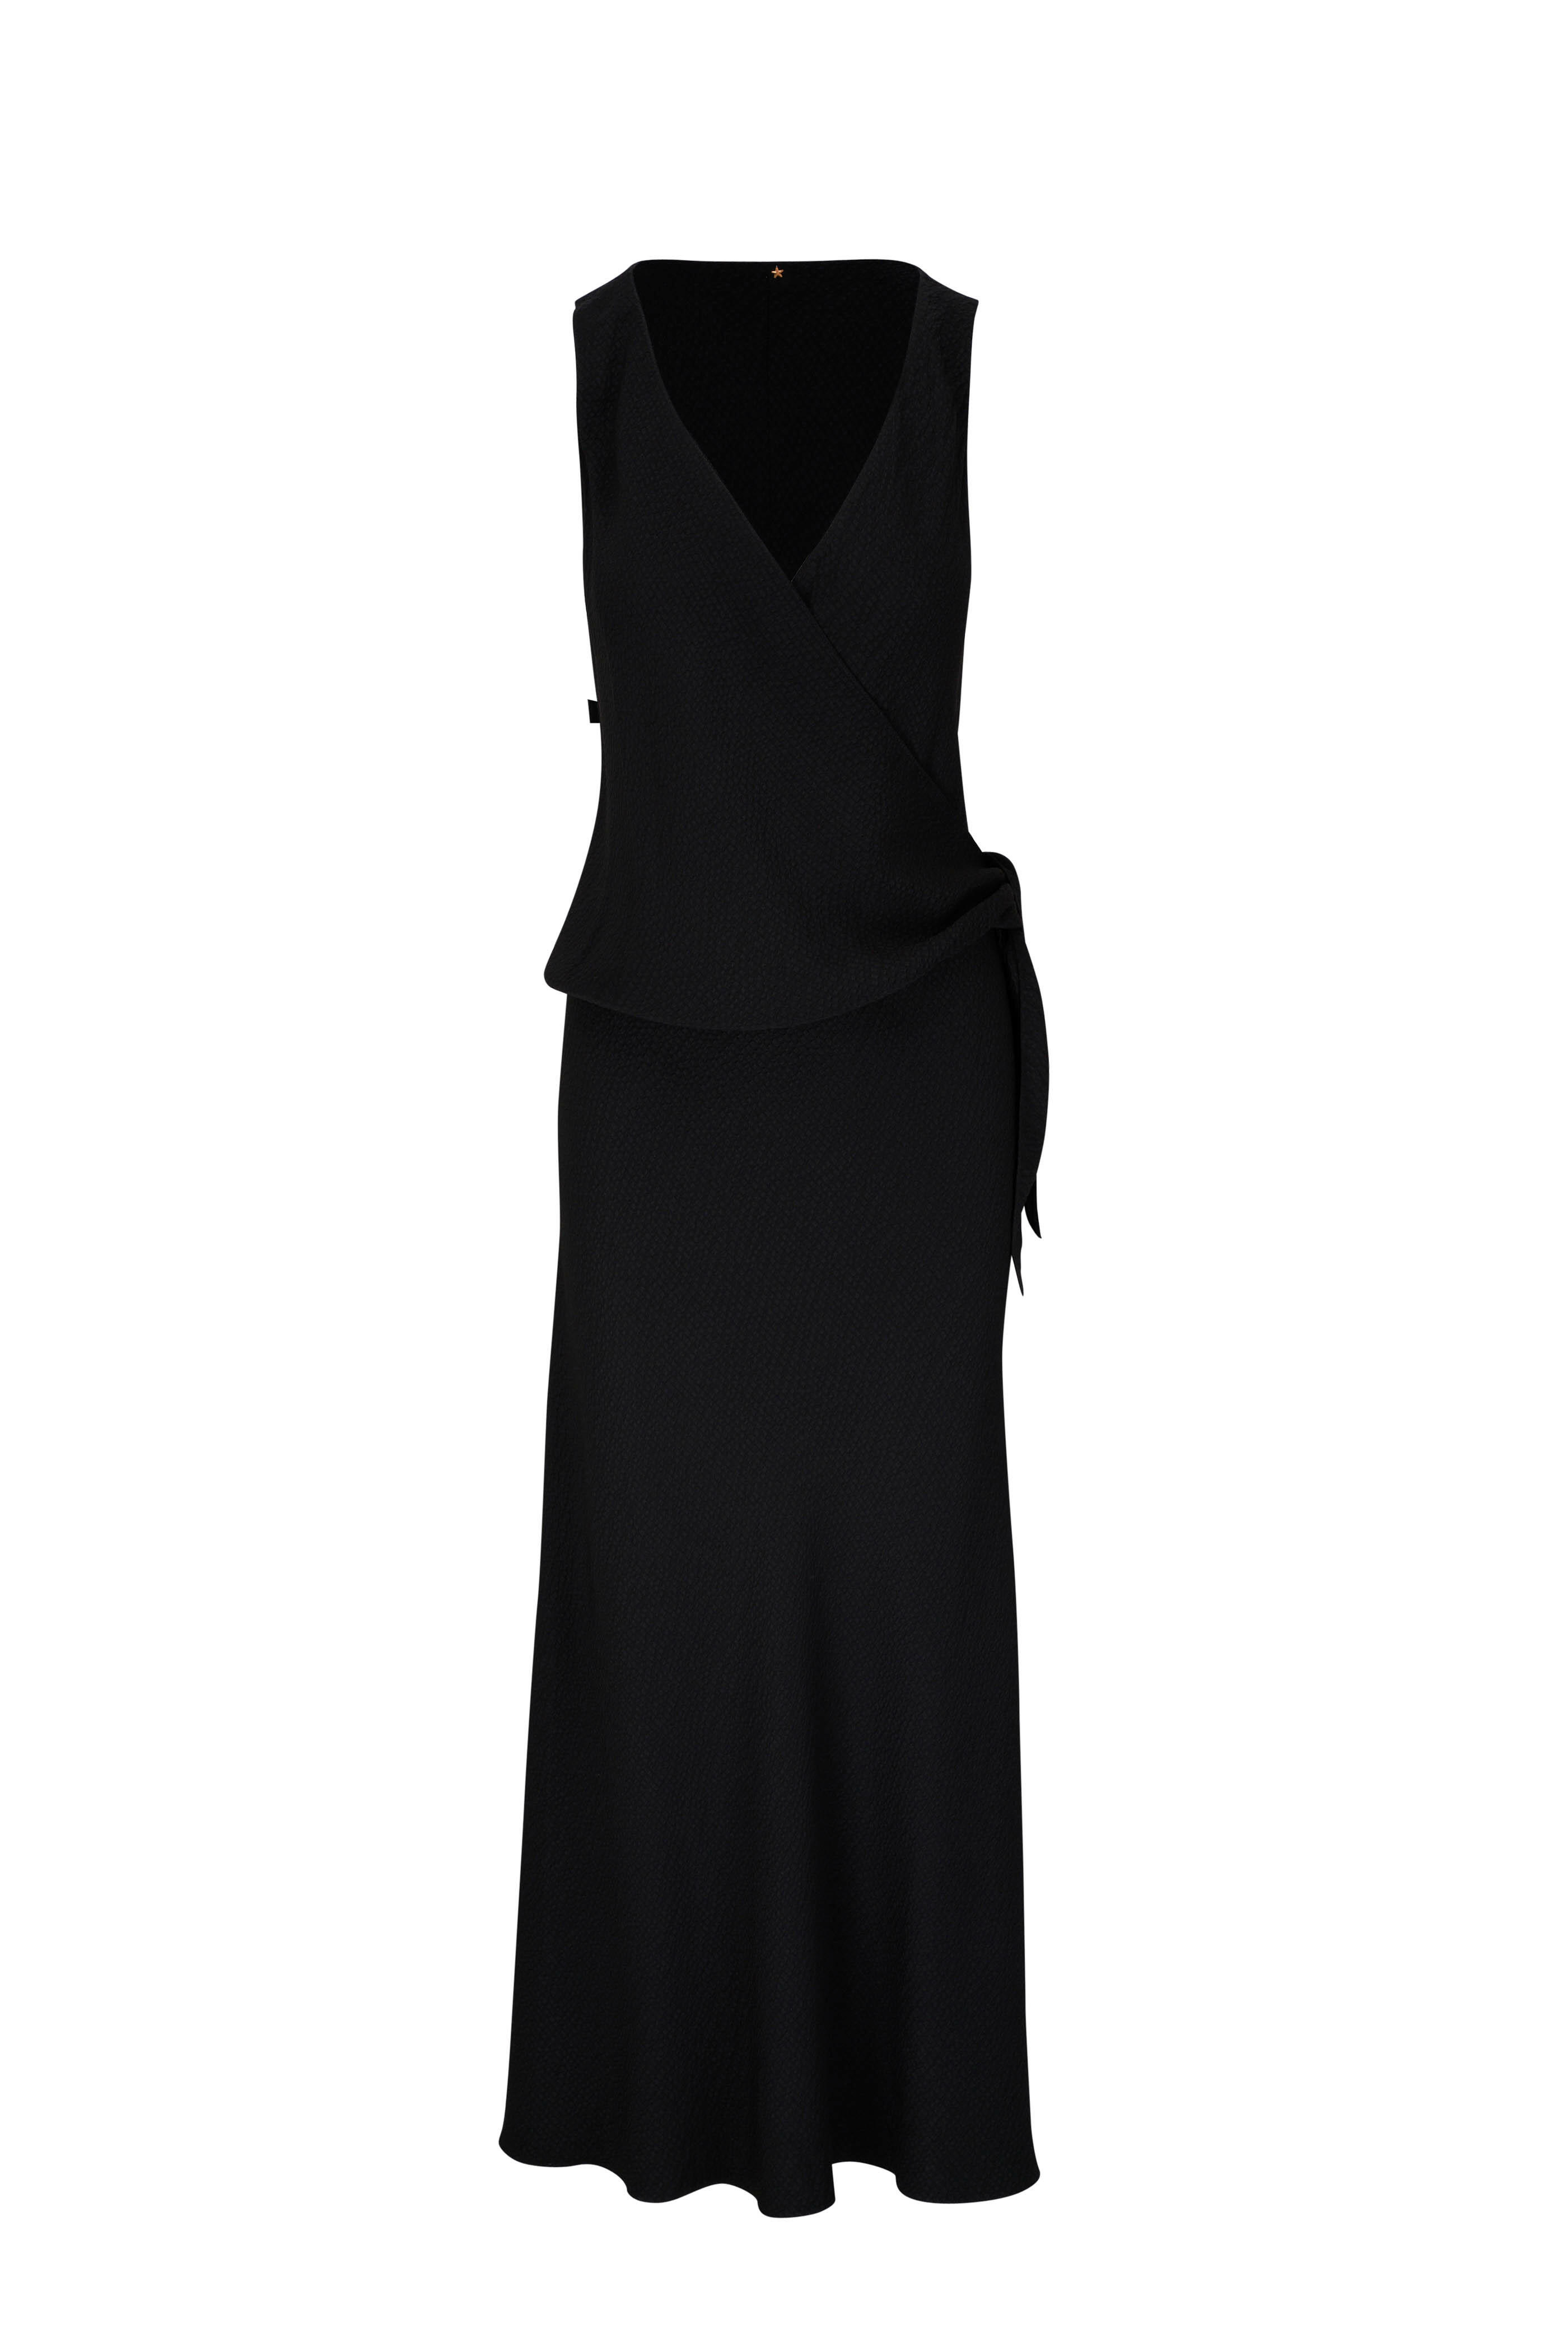 Peter Cohen - Sketch Black Hammered Silk Dress | Mitchell Stores